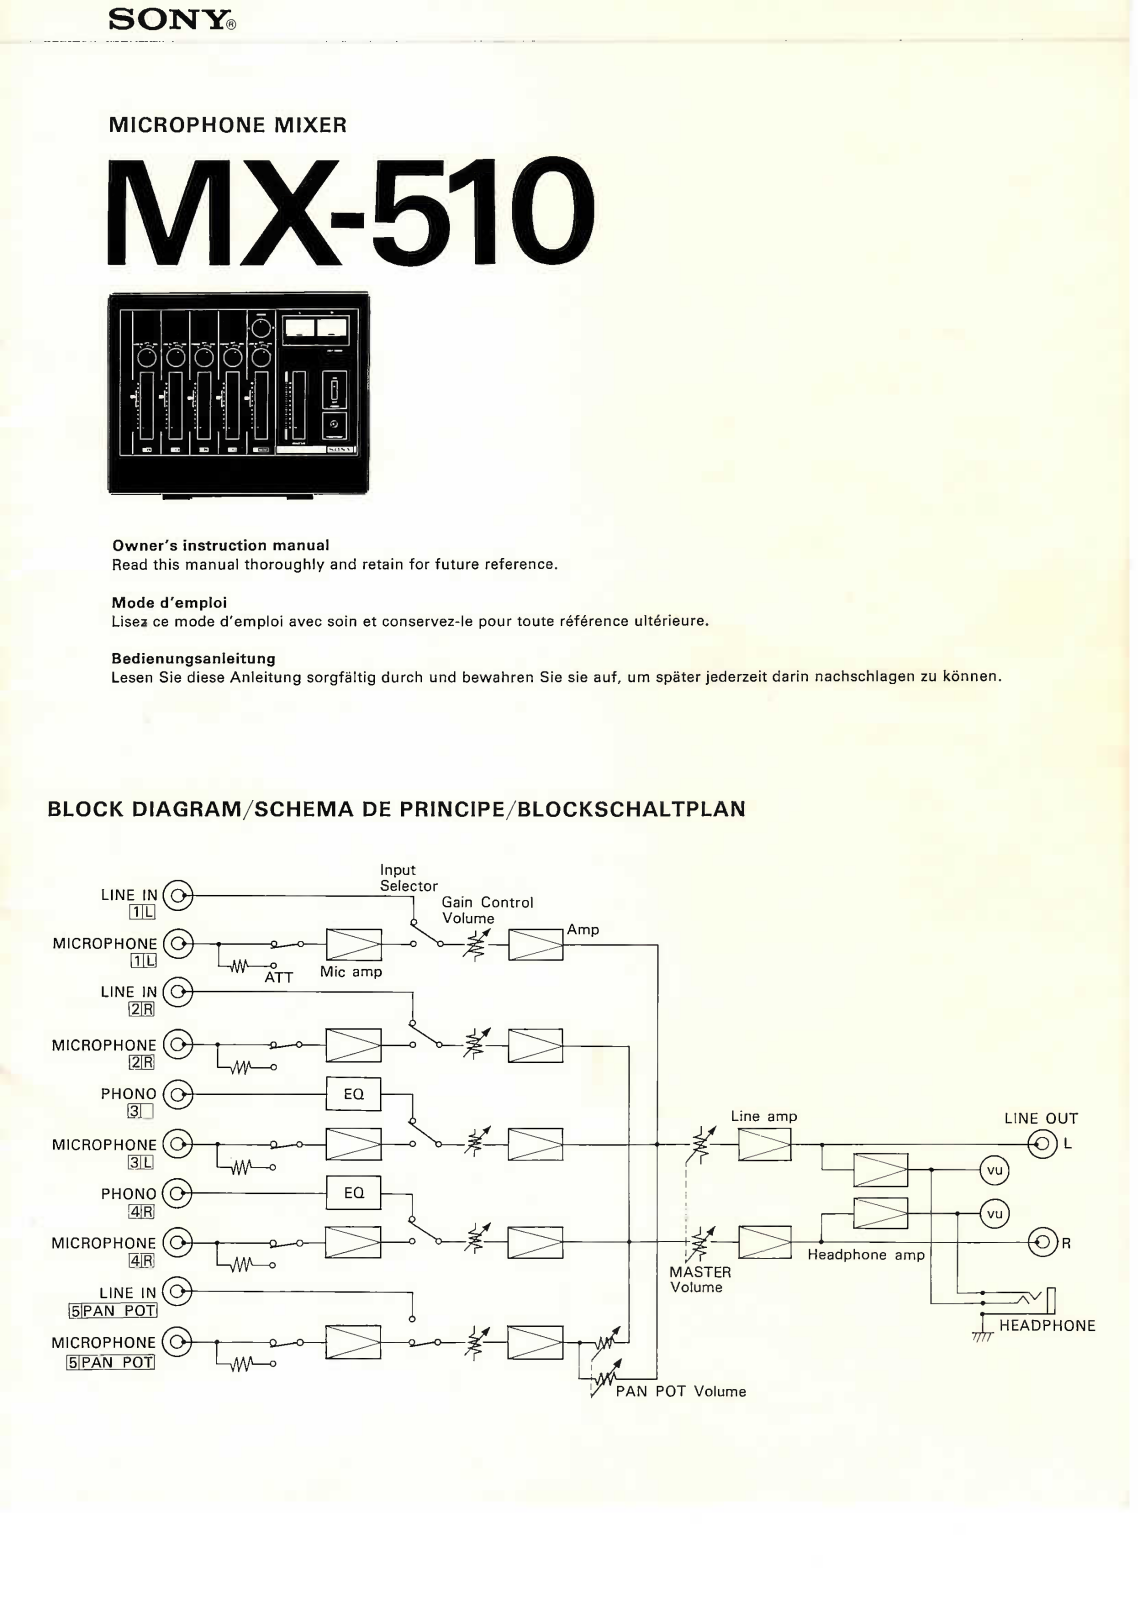 SONY MX-510 User Manual